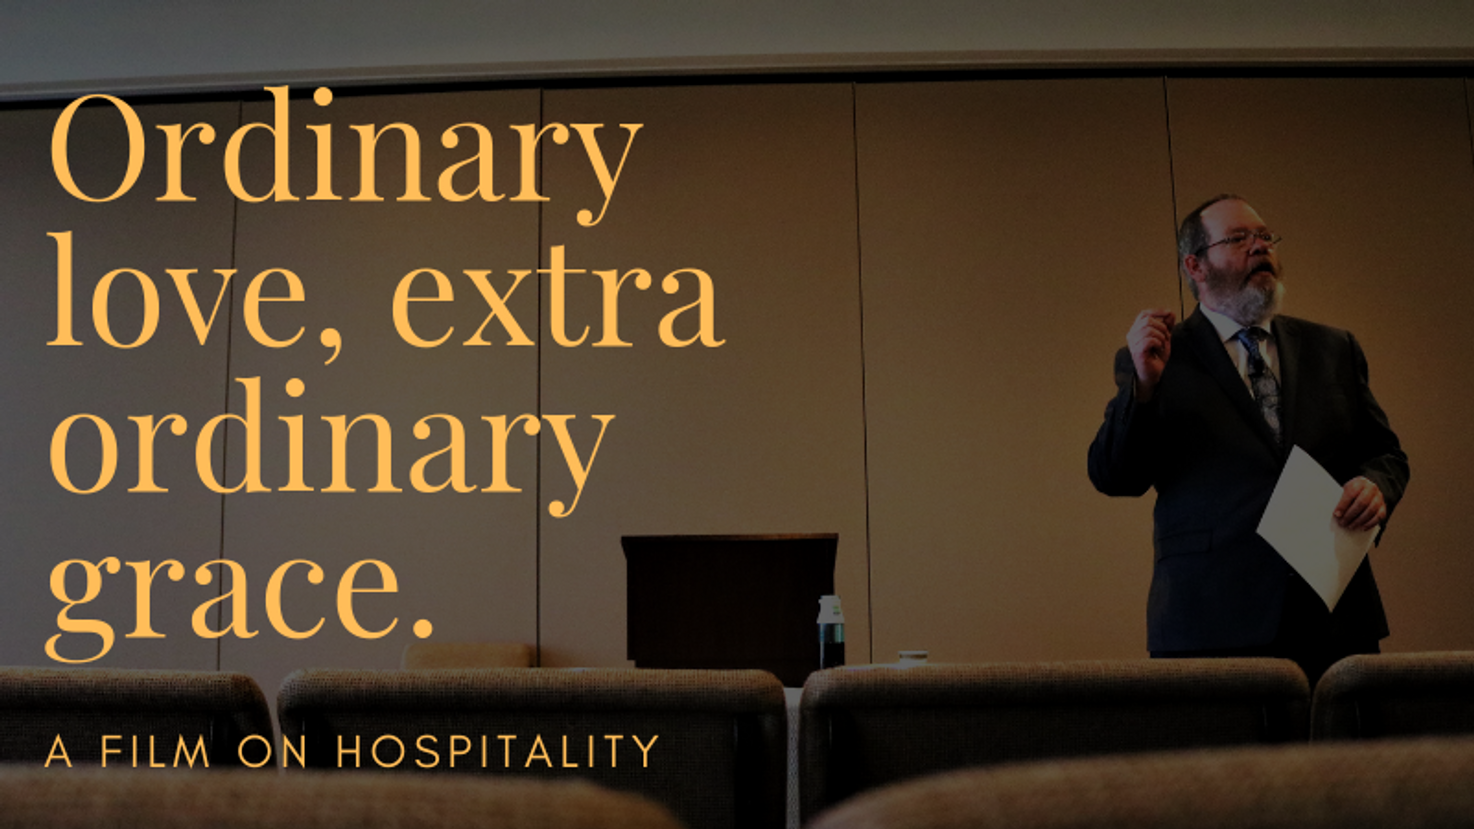 Ordinary Love, Extraordinary Grace: The use of hospitality in sharing the gospel